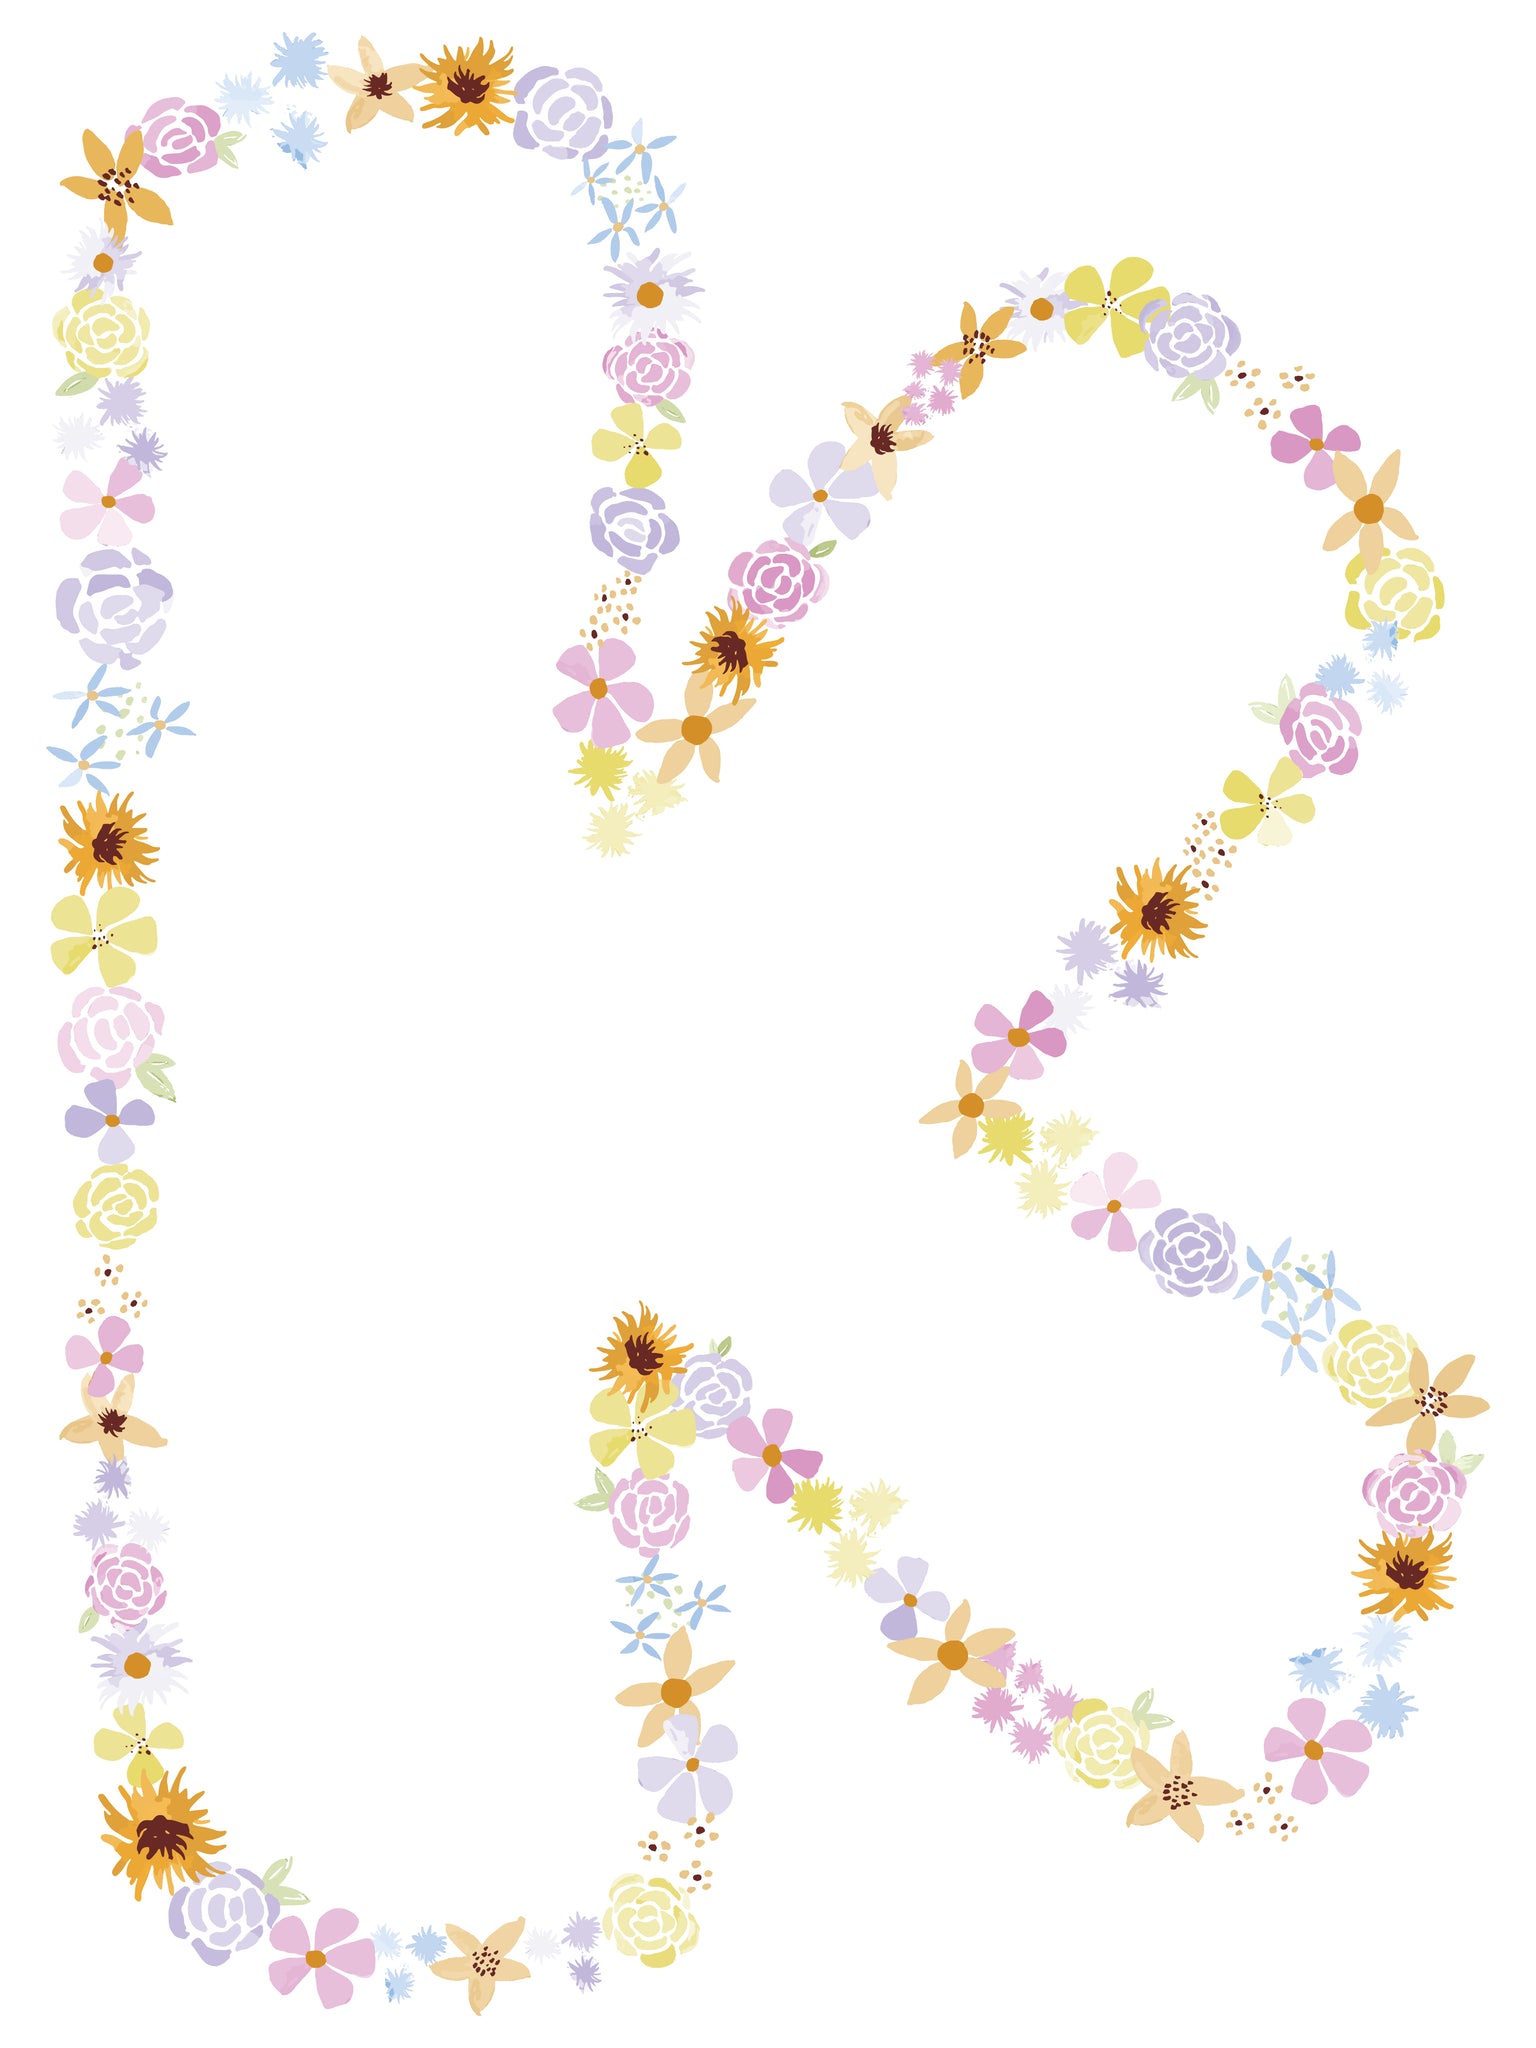 Floral Alphabet Print - K